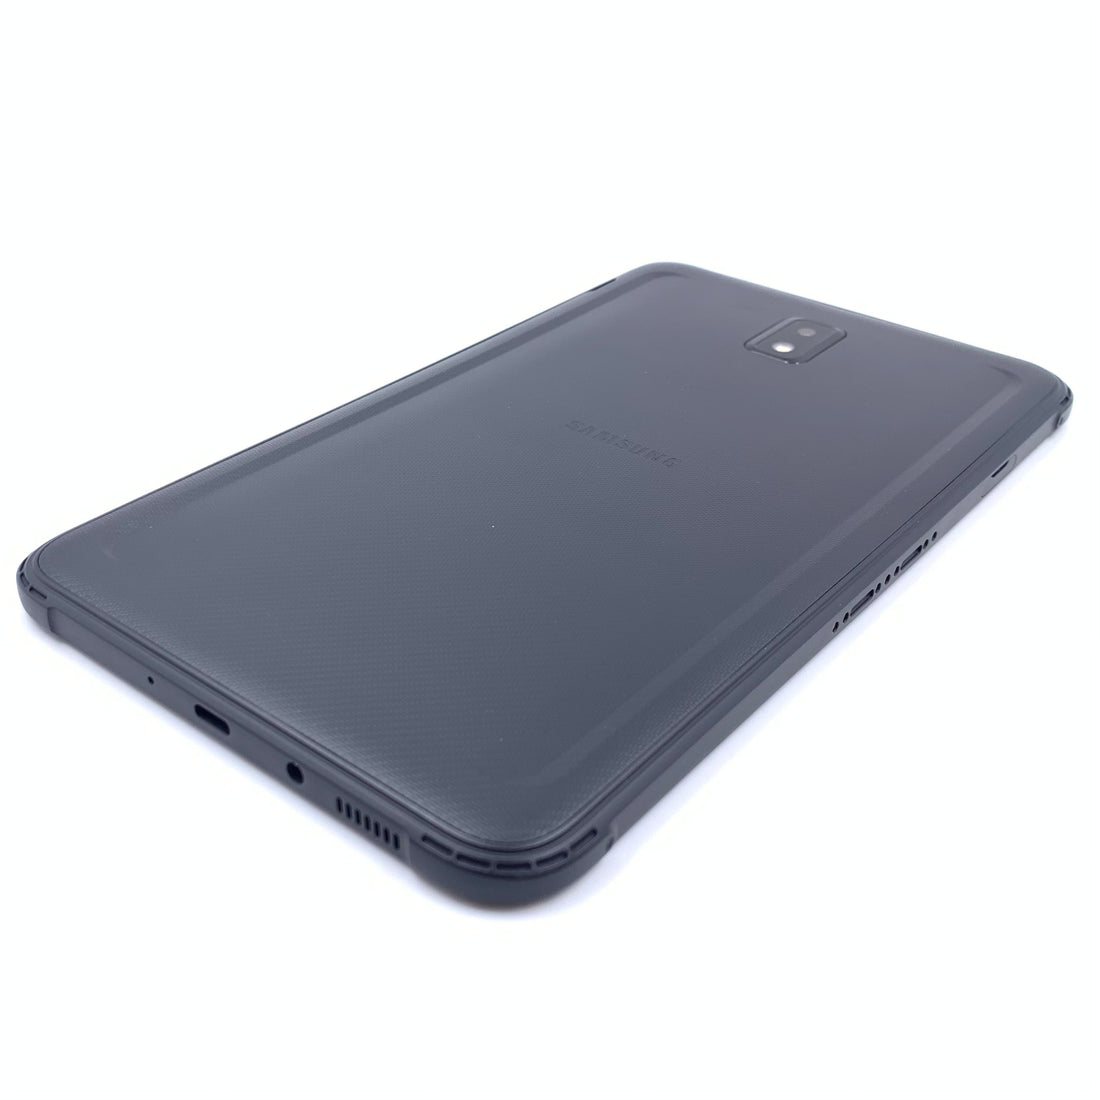 Samsung Galaxy Tab Active 3 SM-T575 64GB (seminuevo)